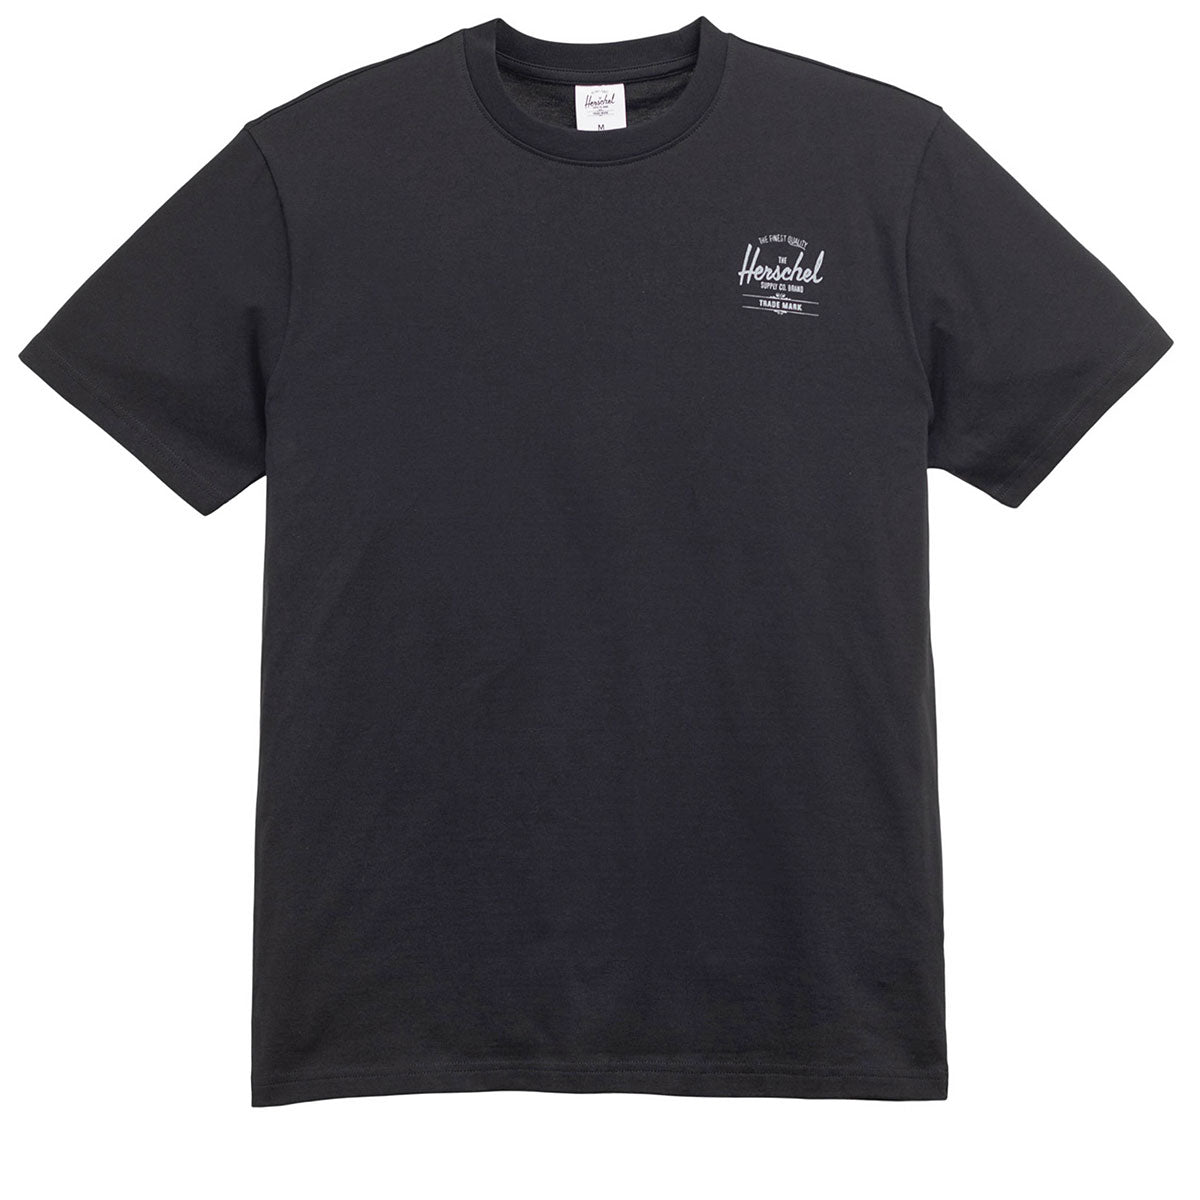 Herschel Supply Basic T-Shirt - Black/White image 1